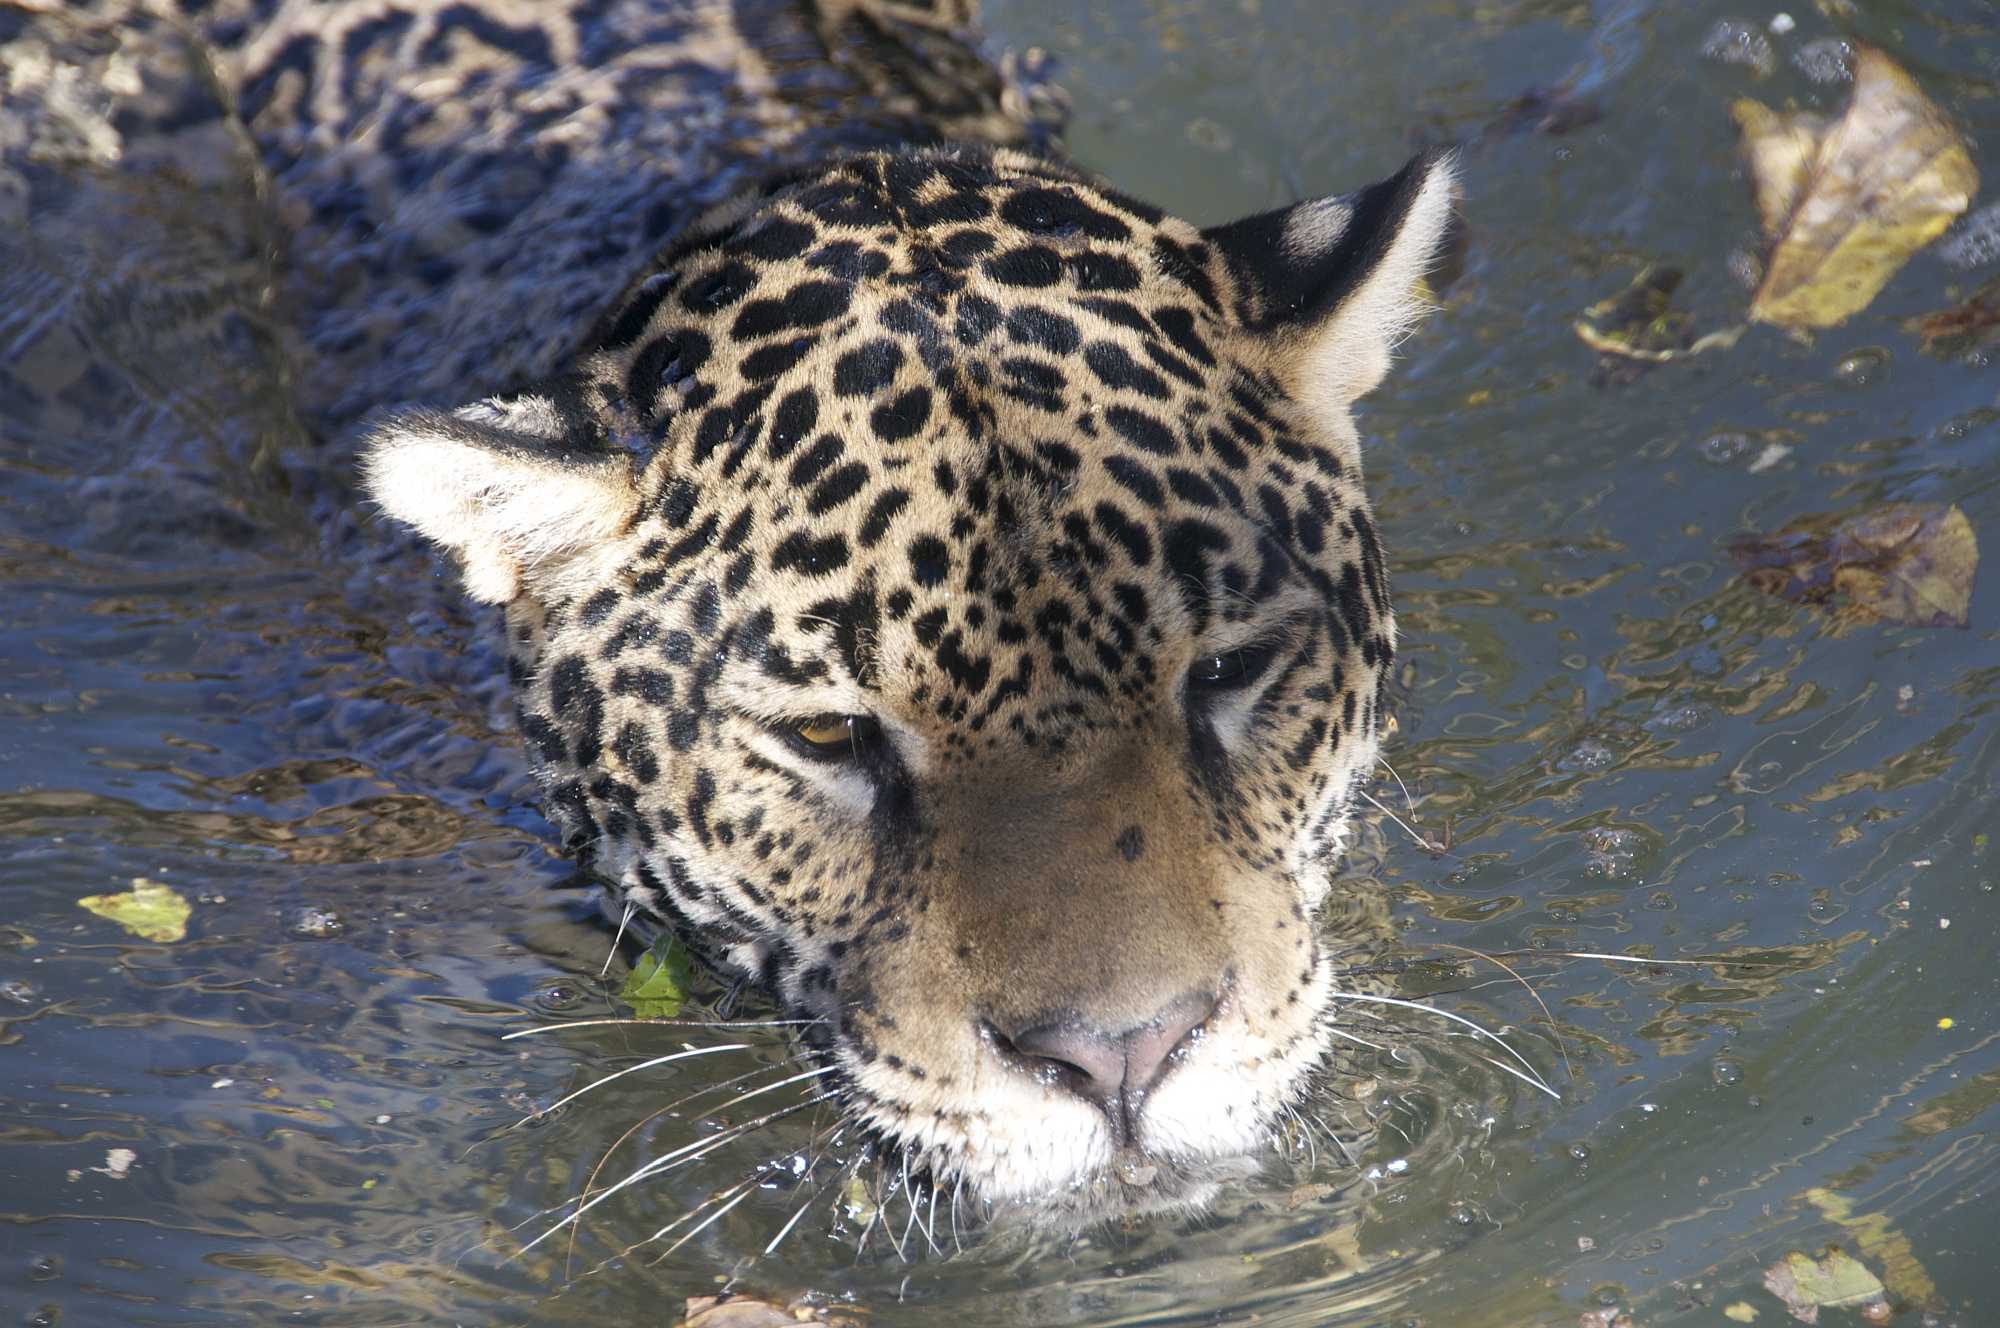 Jaguar swimming in the Amazon